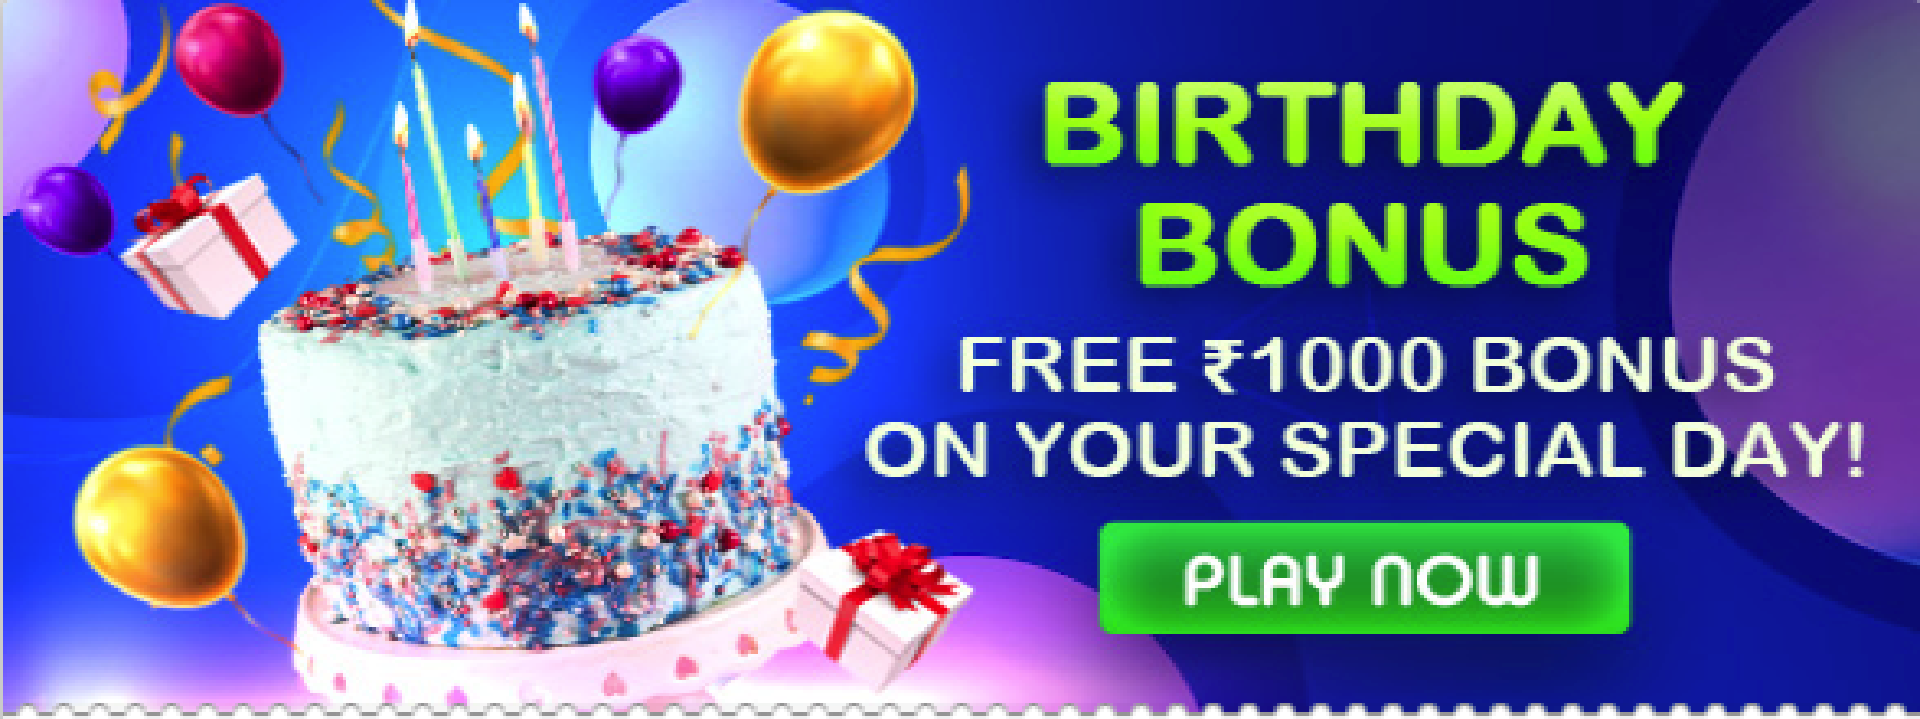 Crickex Birthday Bonus Image